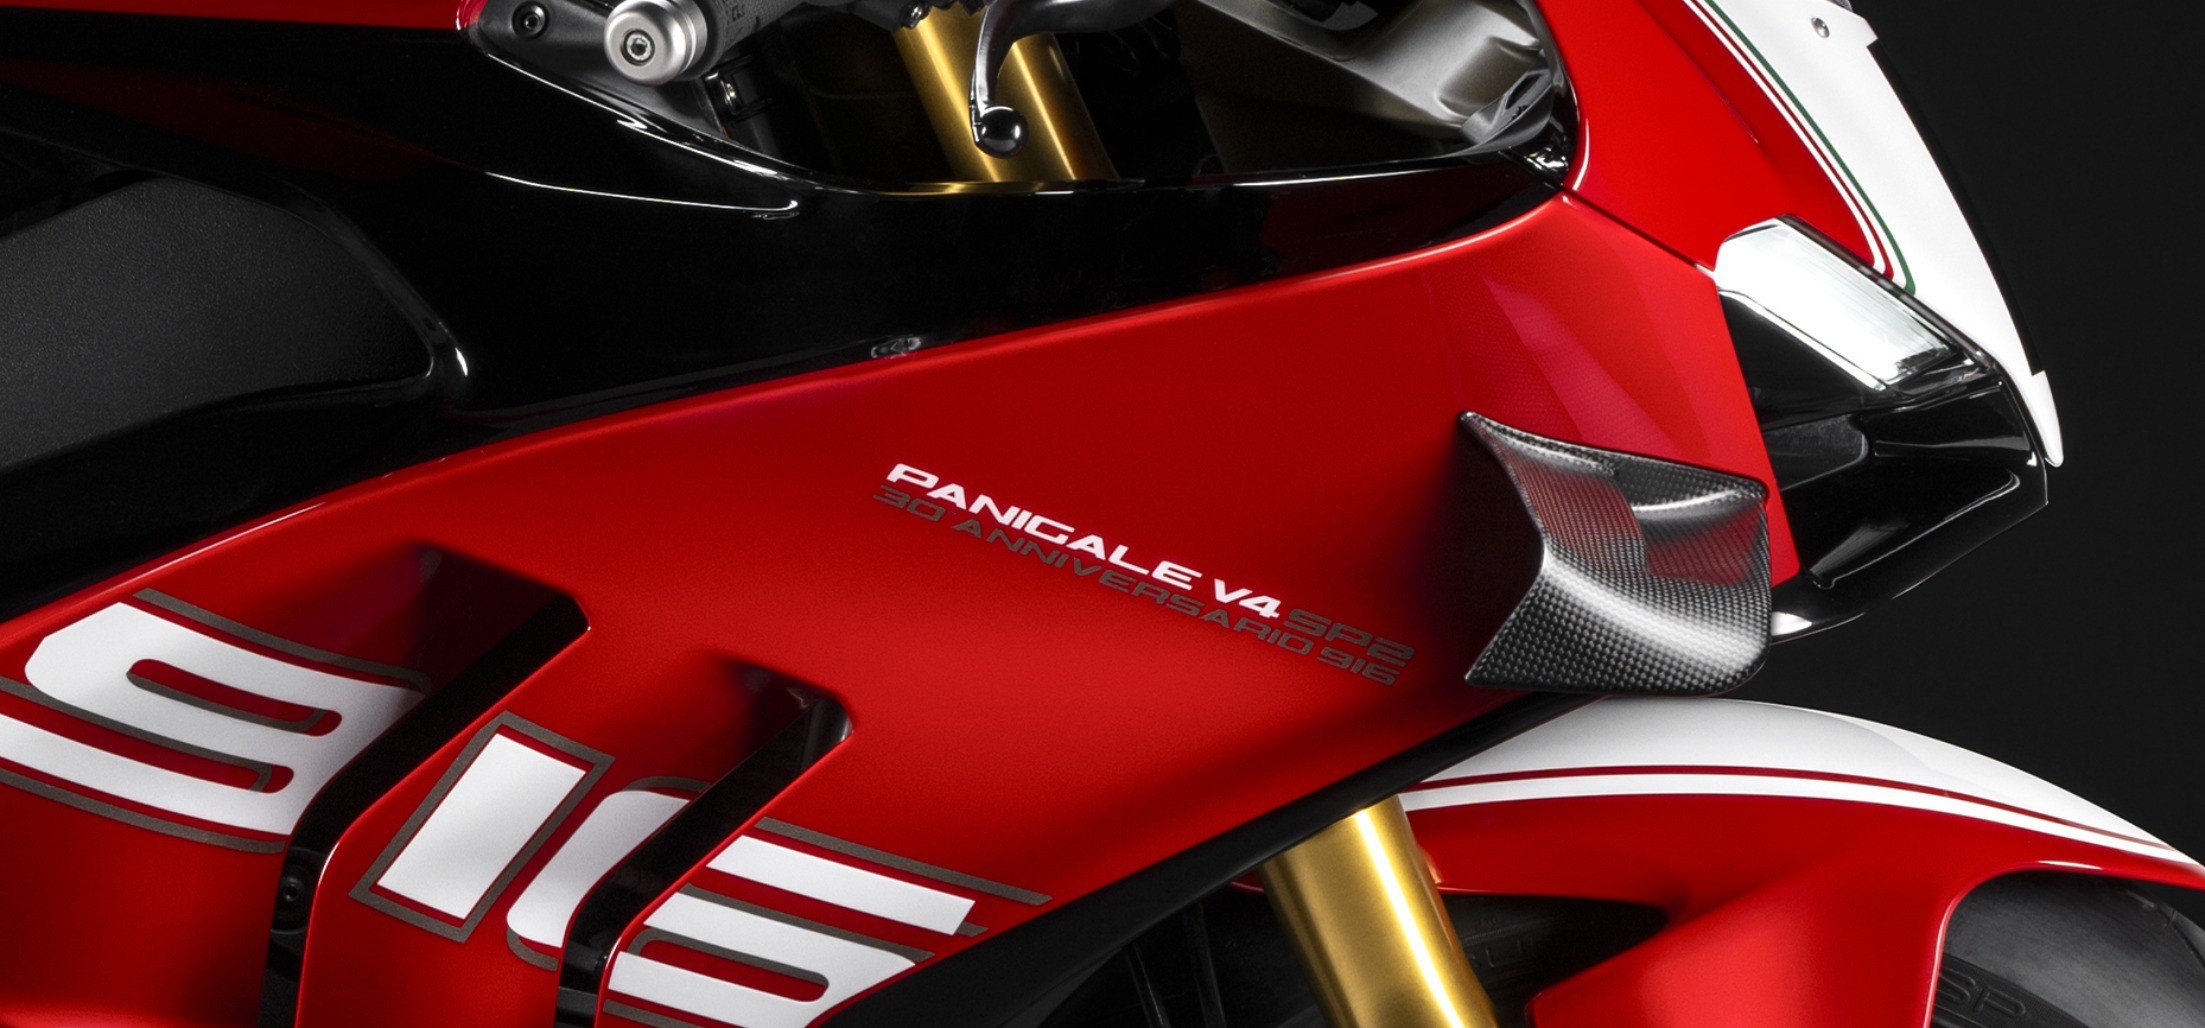 Panigale V4 SP2 30° Anniversario 916: Ducati celebrates the supersport icon